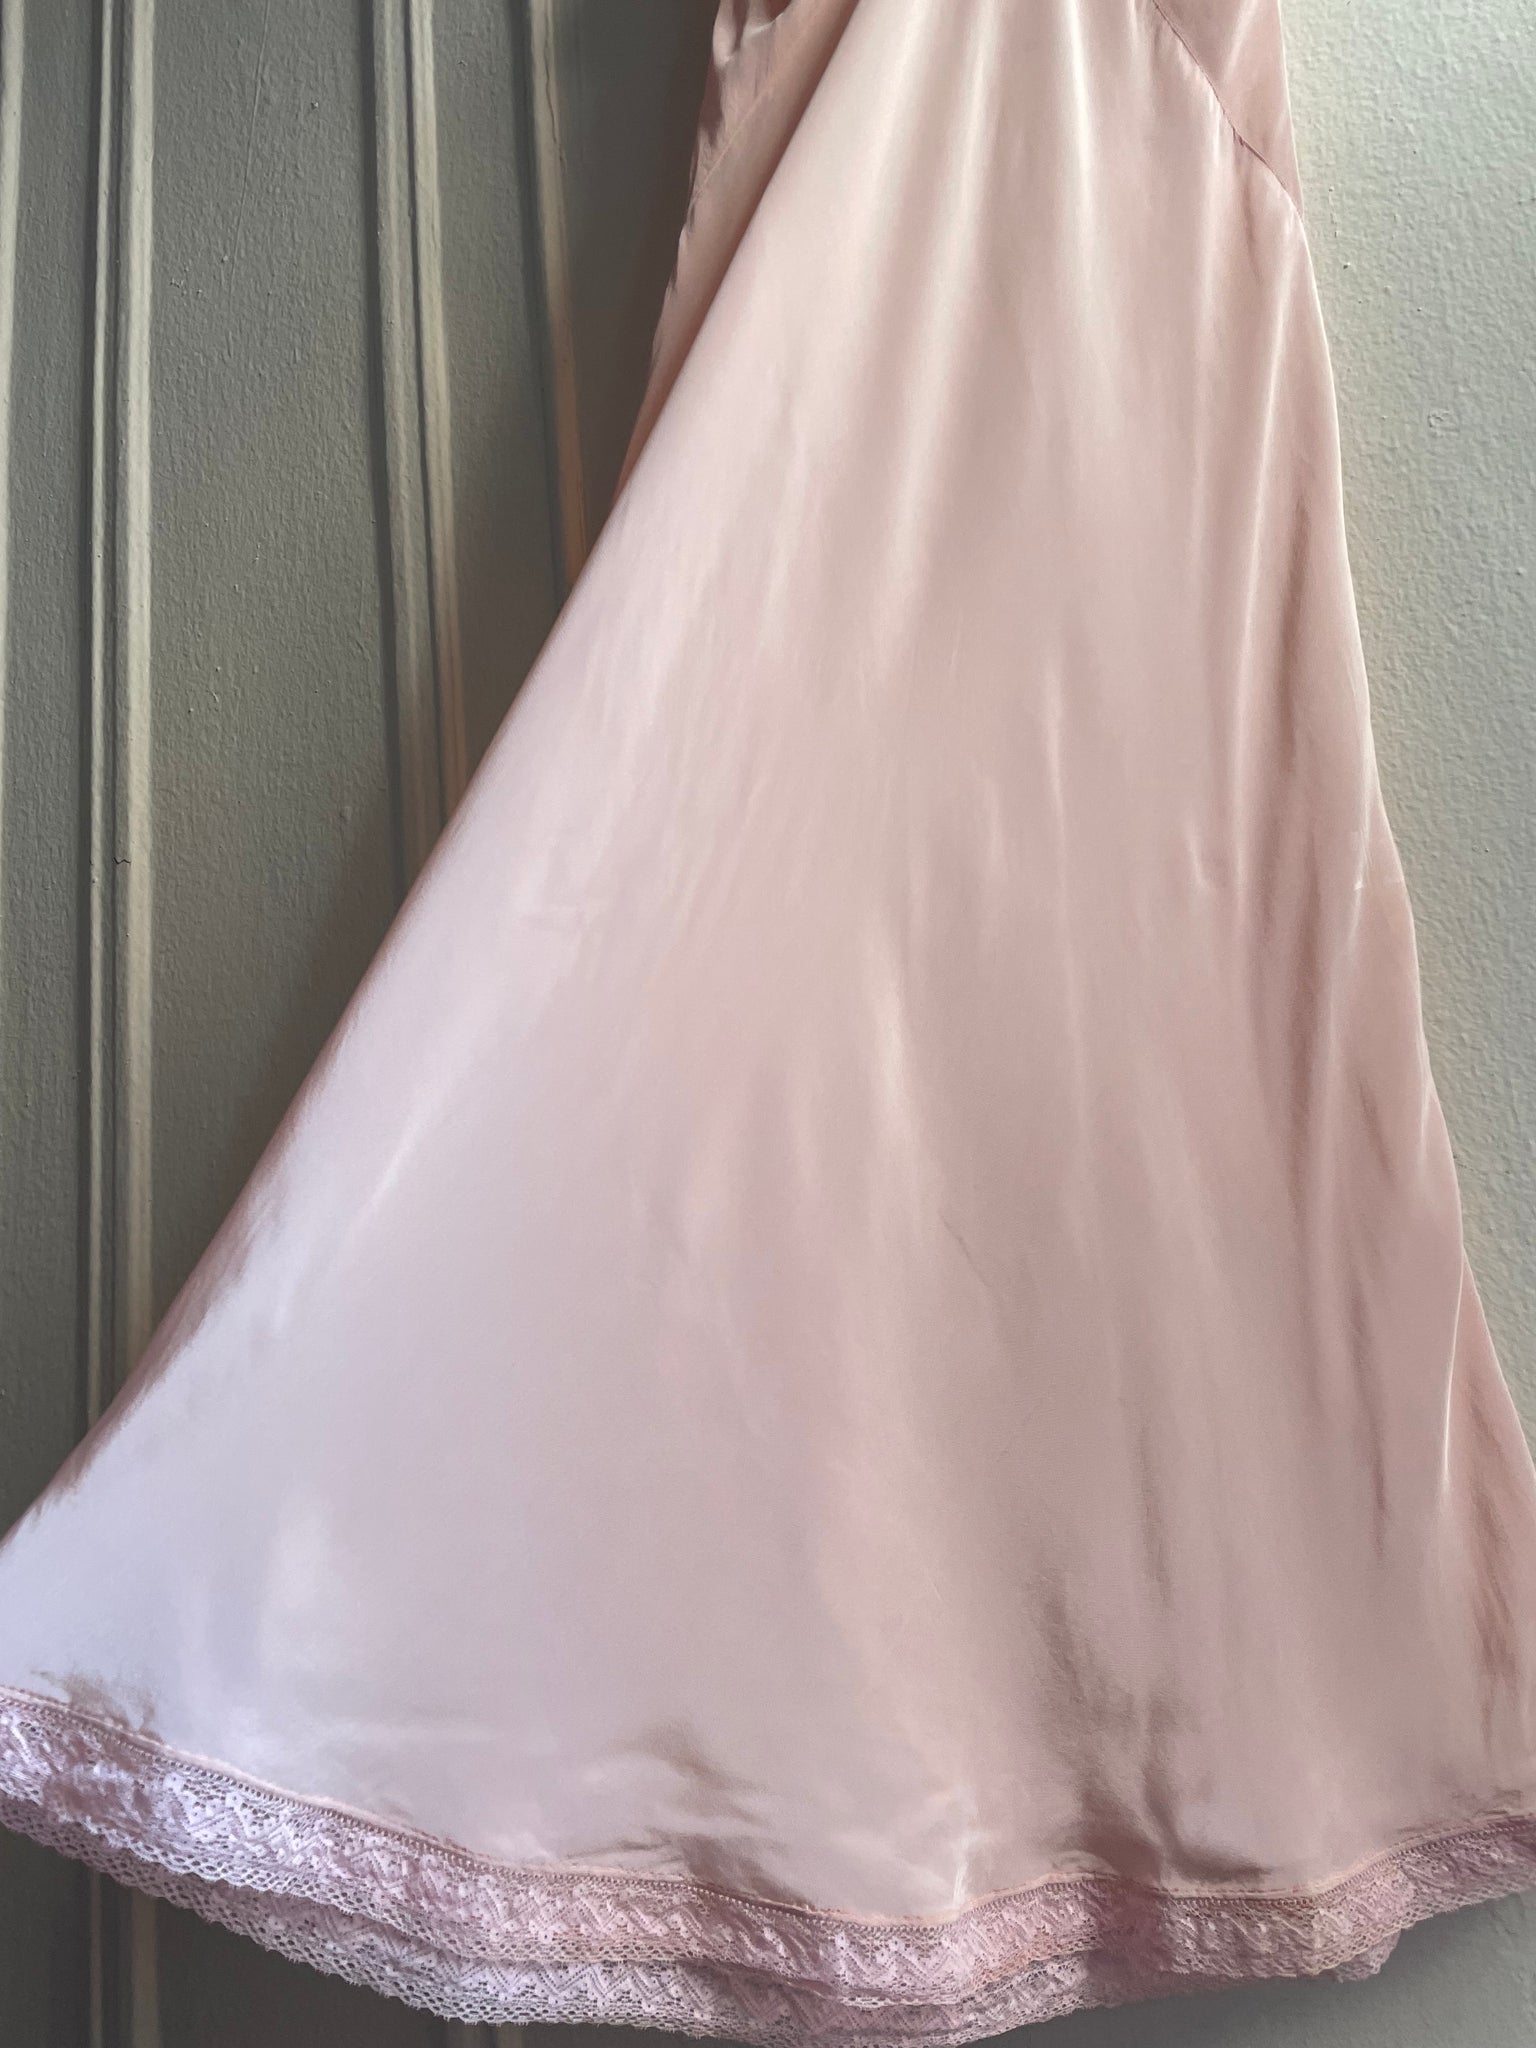 1940s Blush Pink Rayon Bias Cut Midi Slip Dress Antique Handsewn Floral Details